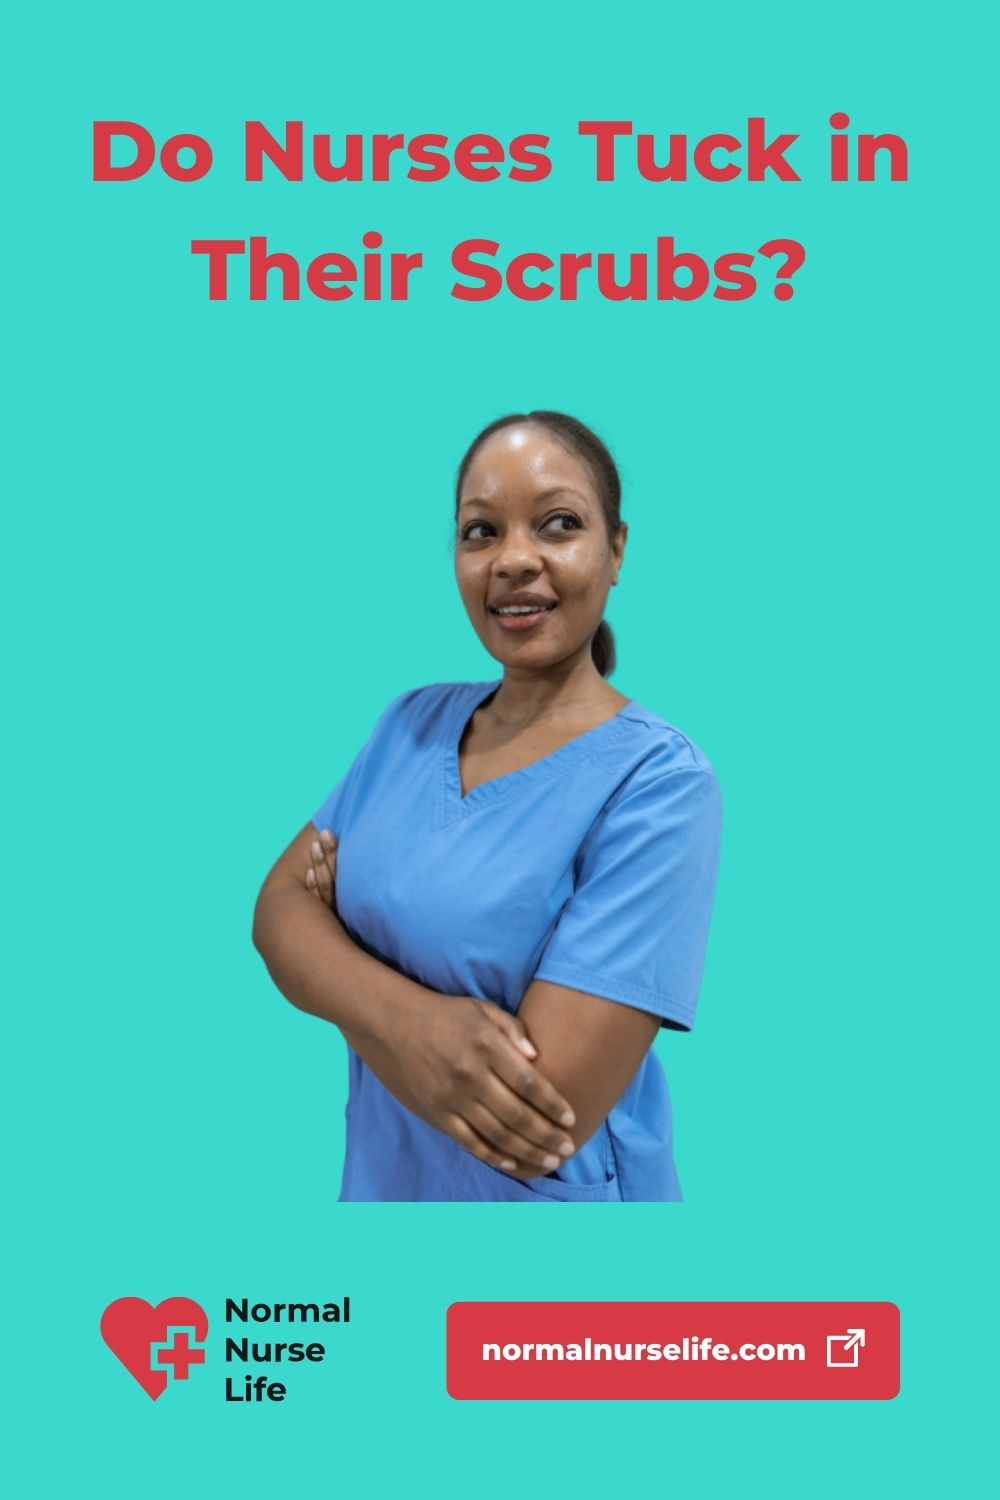 Do nurses tuck in their scrubs or not